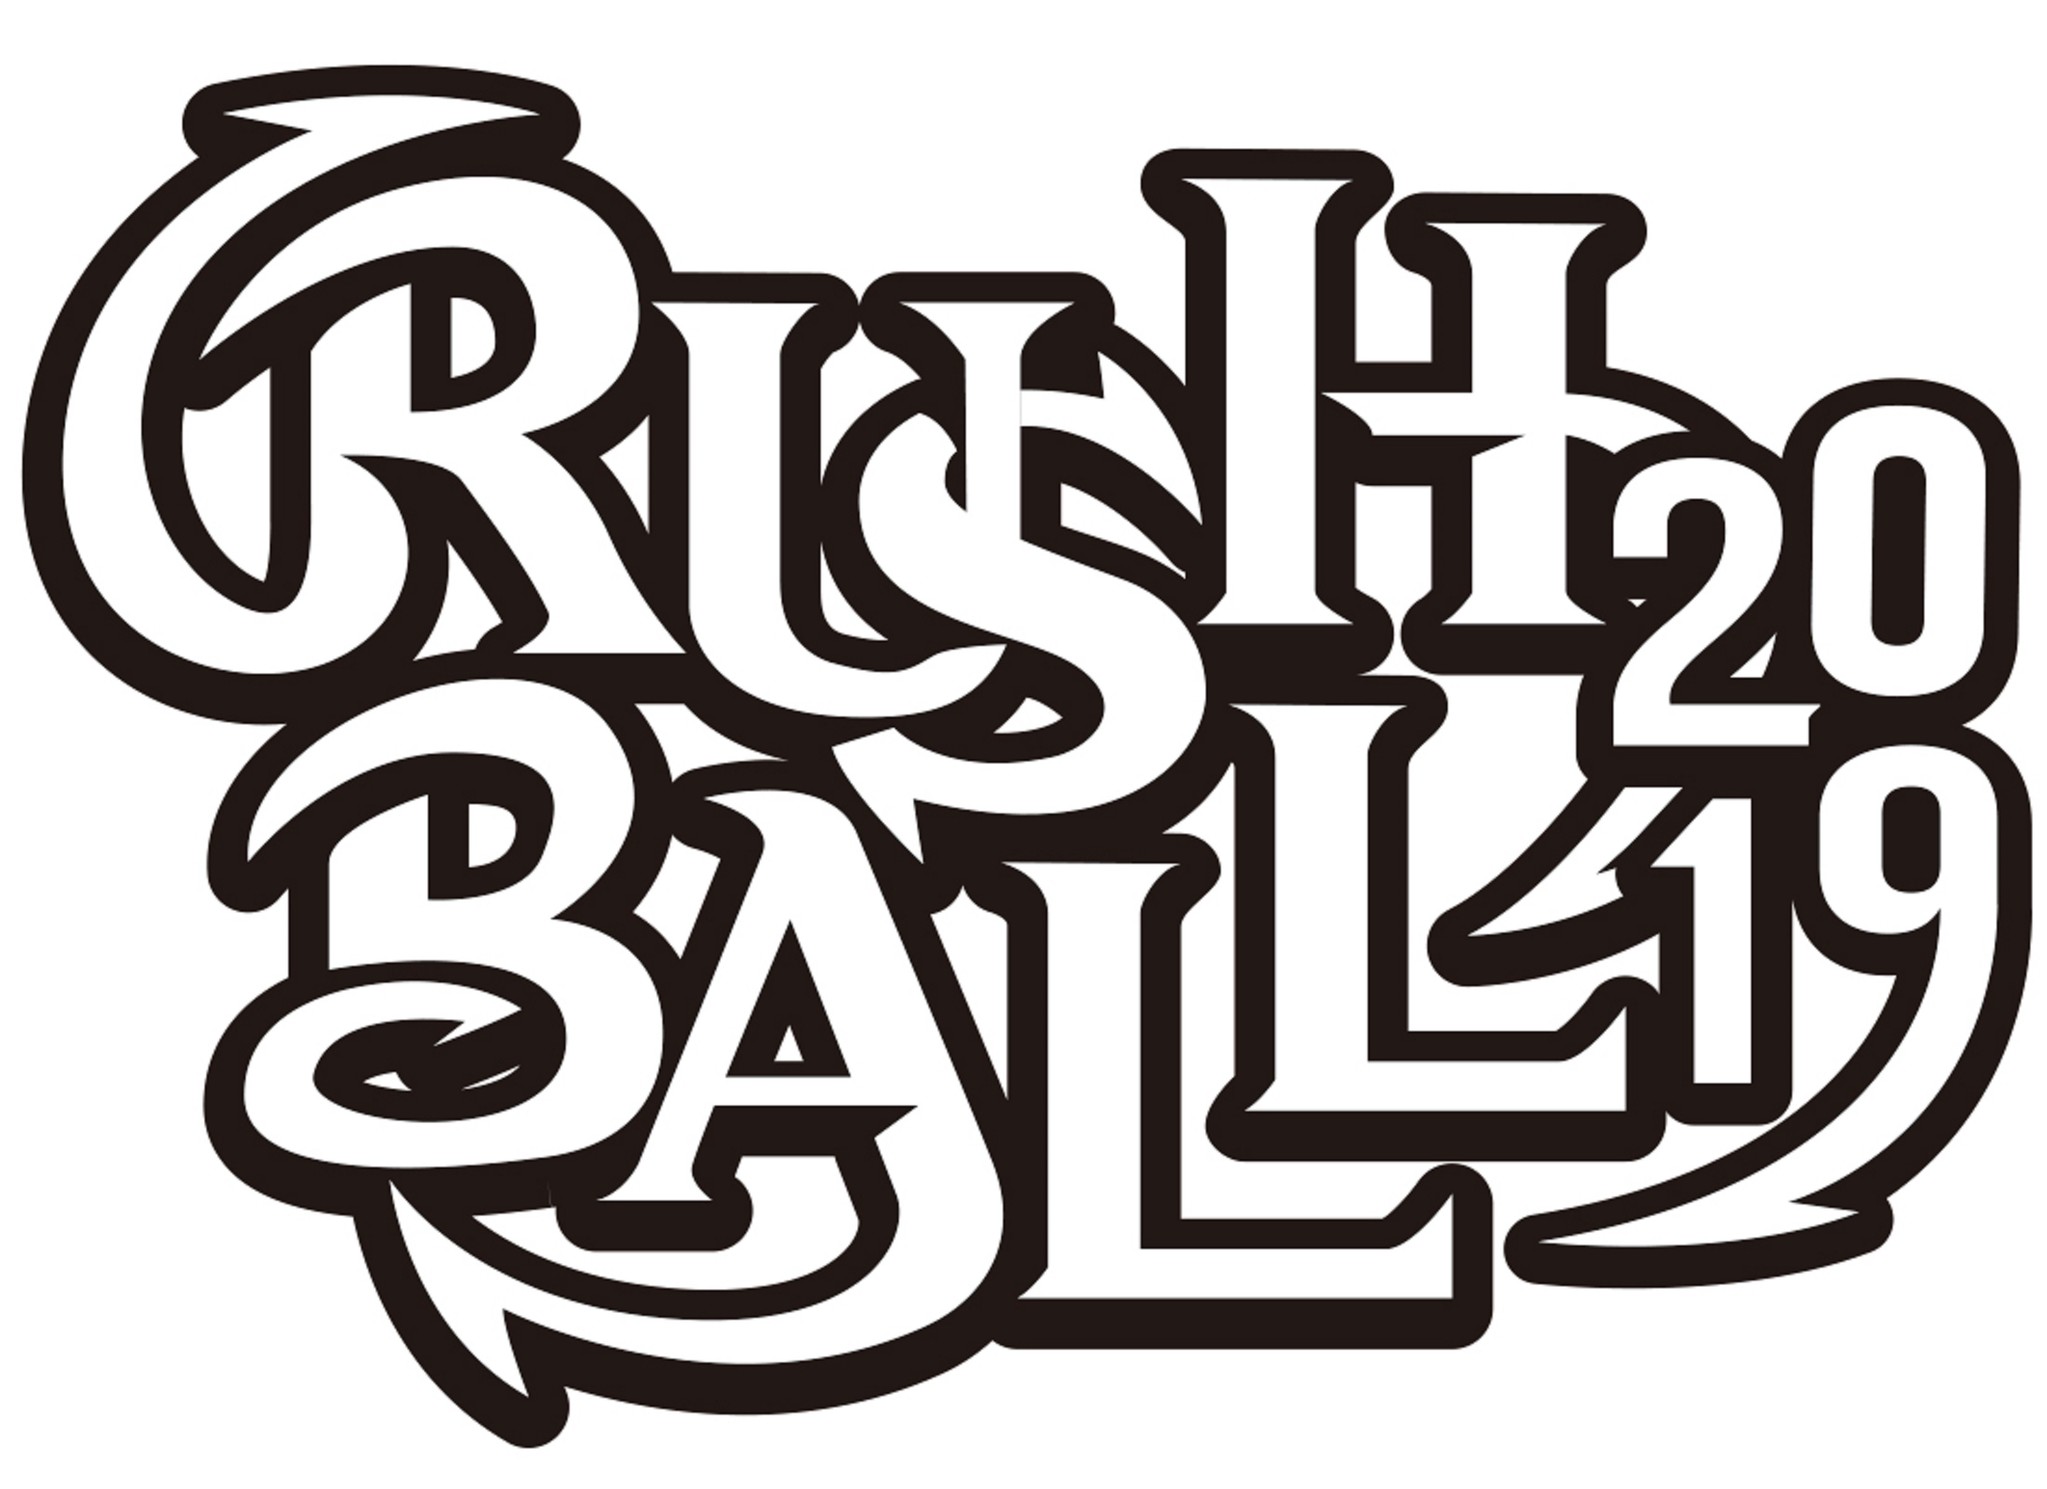 Rush Ball 19 Gyao での無料配信アーティストが決定 株式会社gyaoのプレスリリース